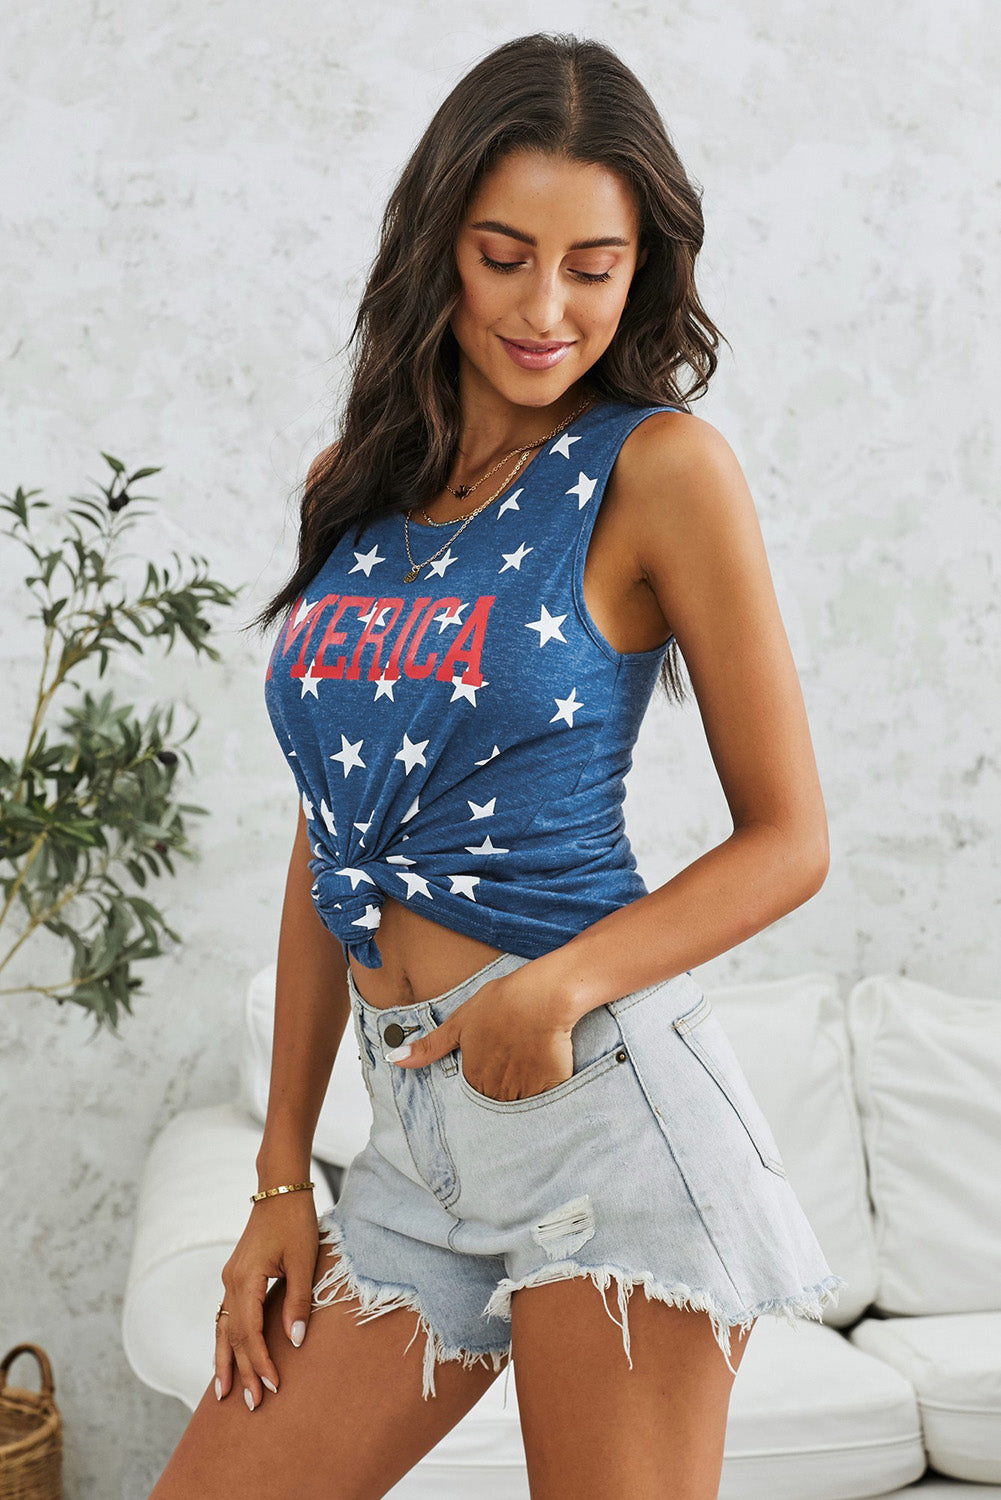 MERICA Star Print American Round Neck Shirt Sleeveless Tank Top (Plus Size Available)